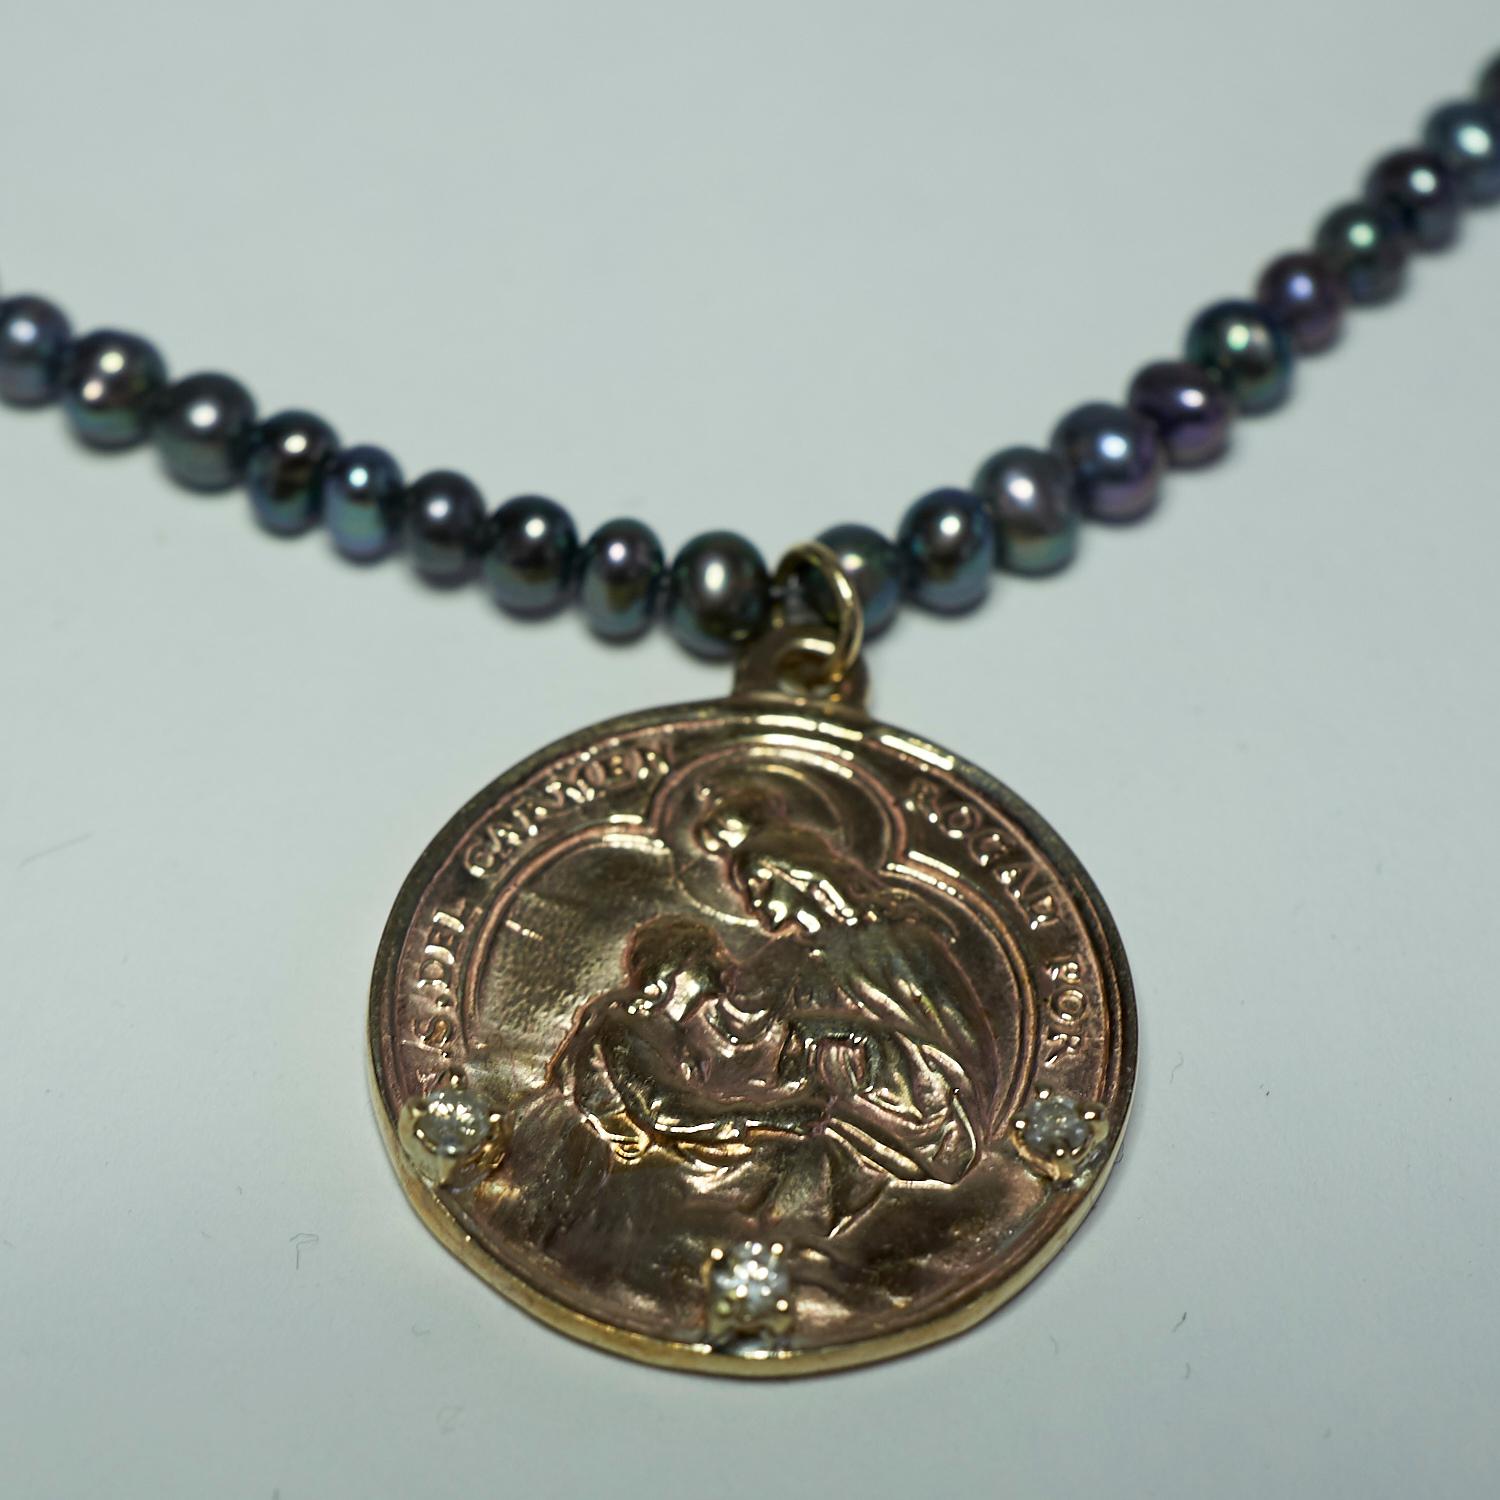 Brilliant Cut Diamond Virgin Mary Medal Necklace Choker Black Pearl Bead Chain J Dauphin For Sale